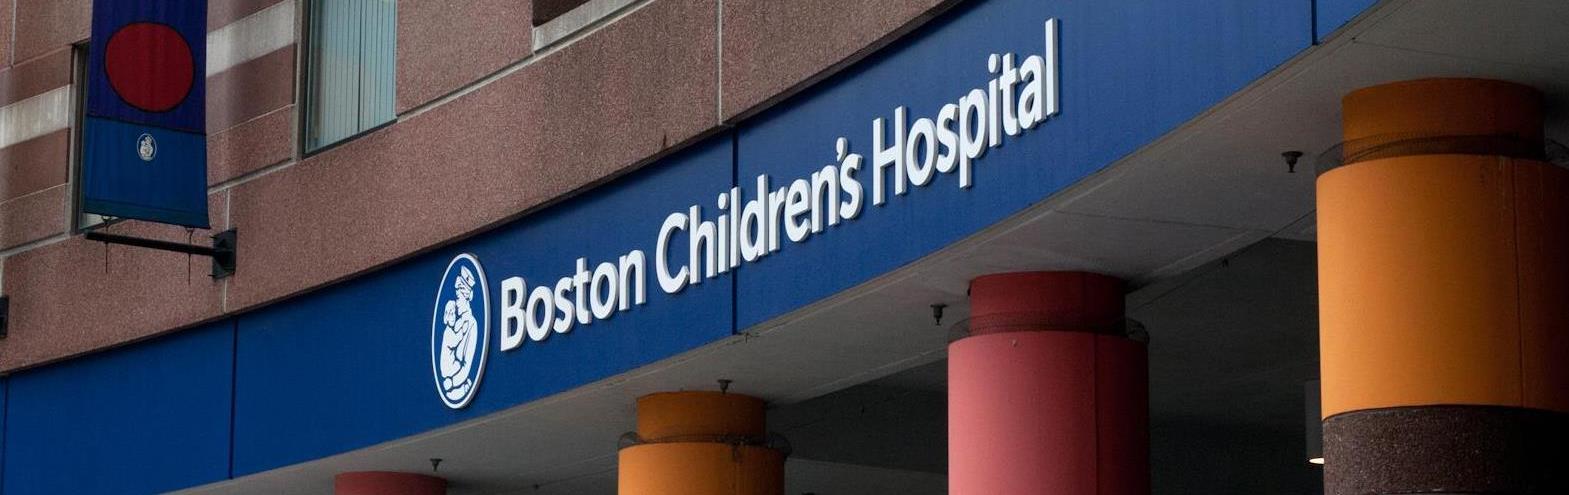 An exterior image of Boston Children's Hospital